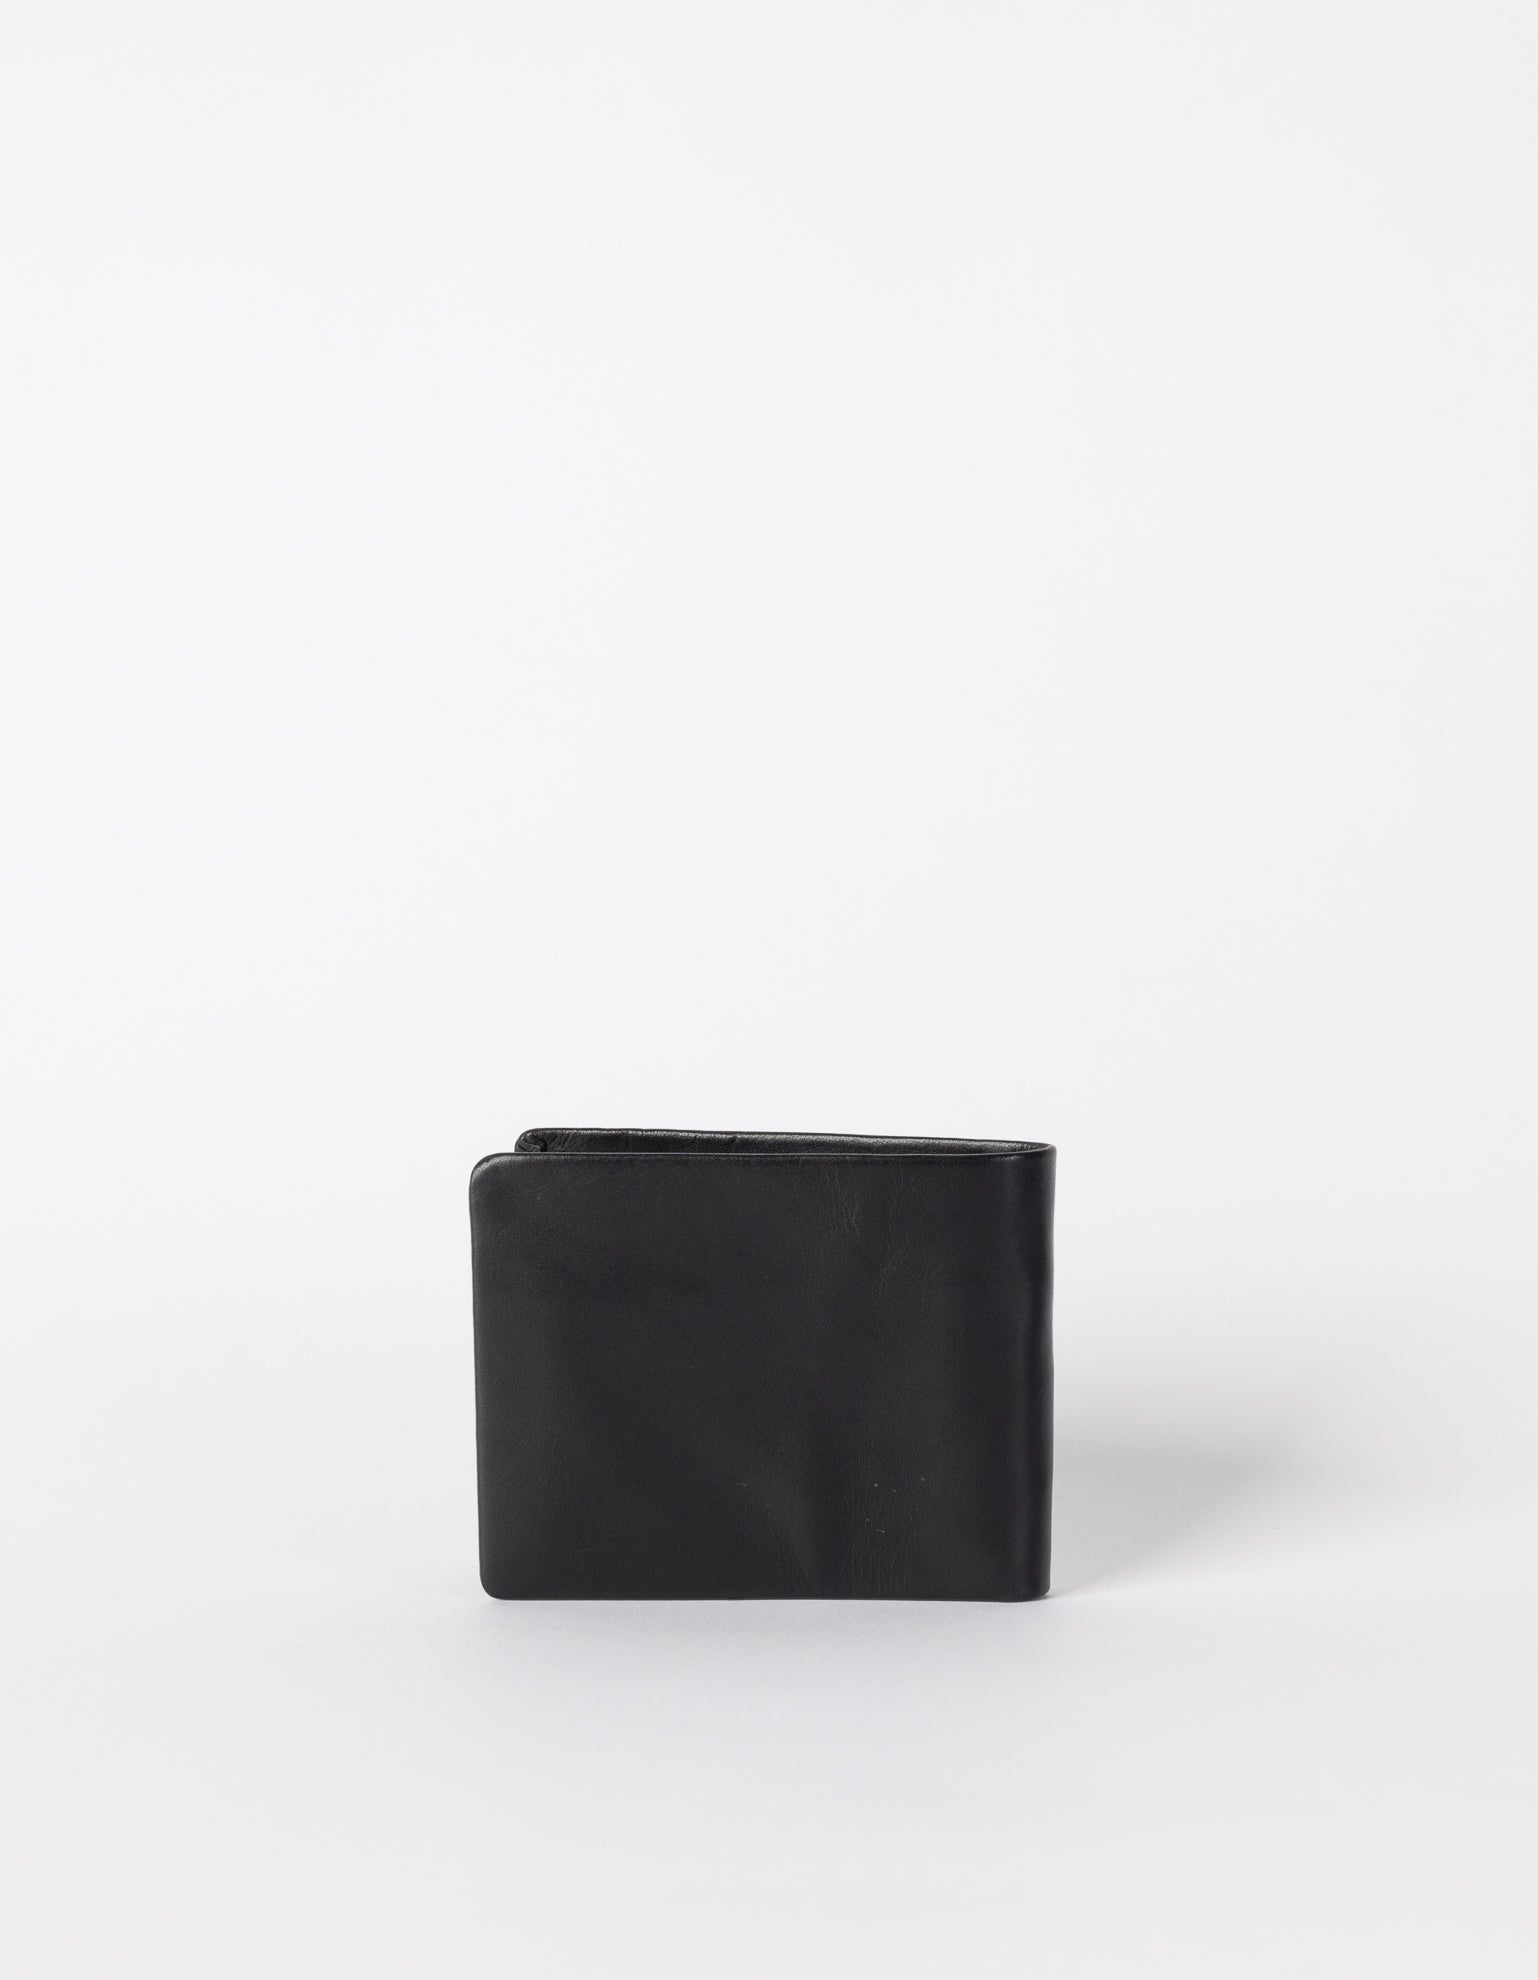 Black Leather fold over wallet. Square shape. Back product image.